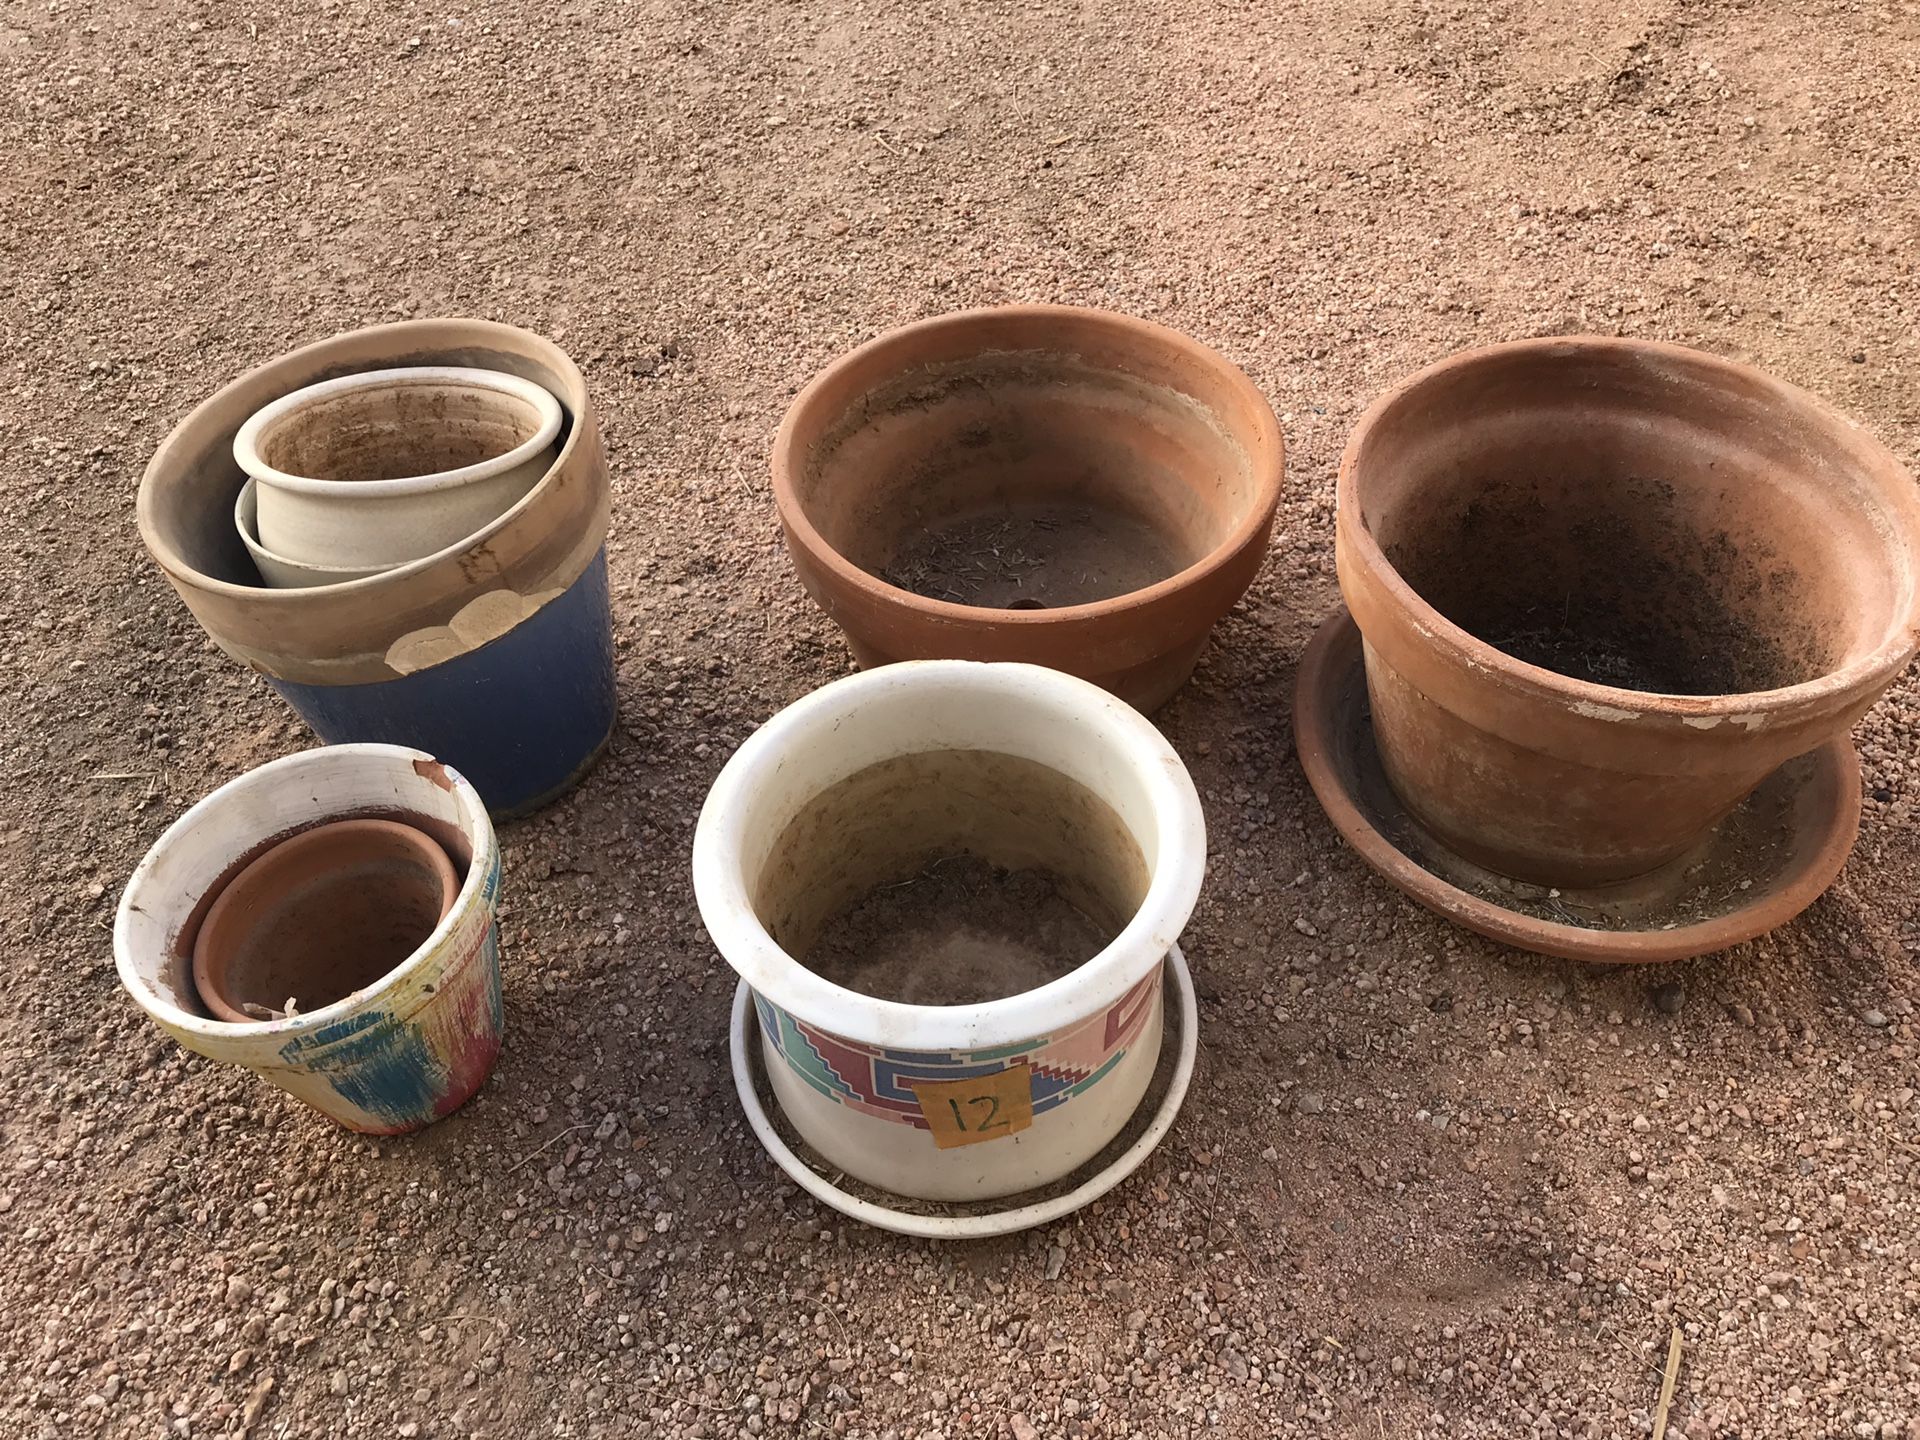 14 ceramic flower pots, various sizes